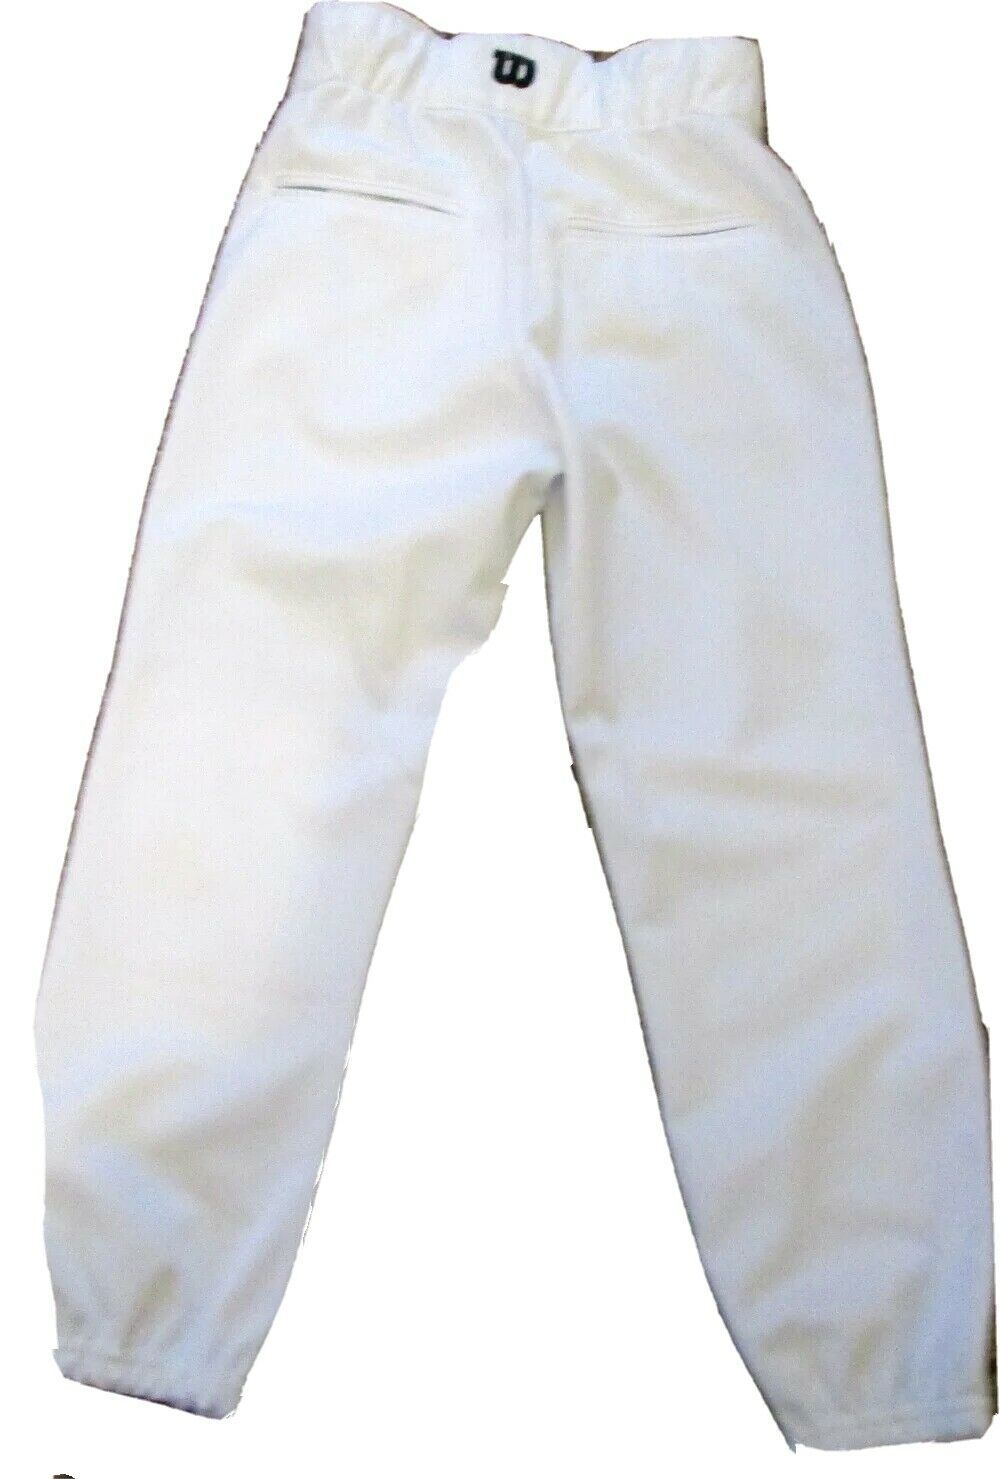 Primary image for Wilson Baseball Pants, Youth Medium, White WTA 4210